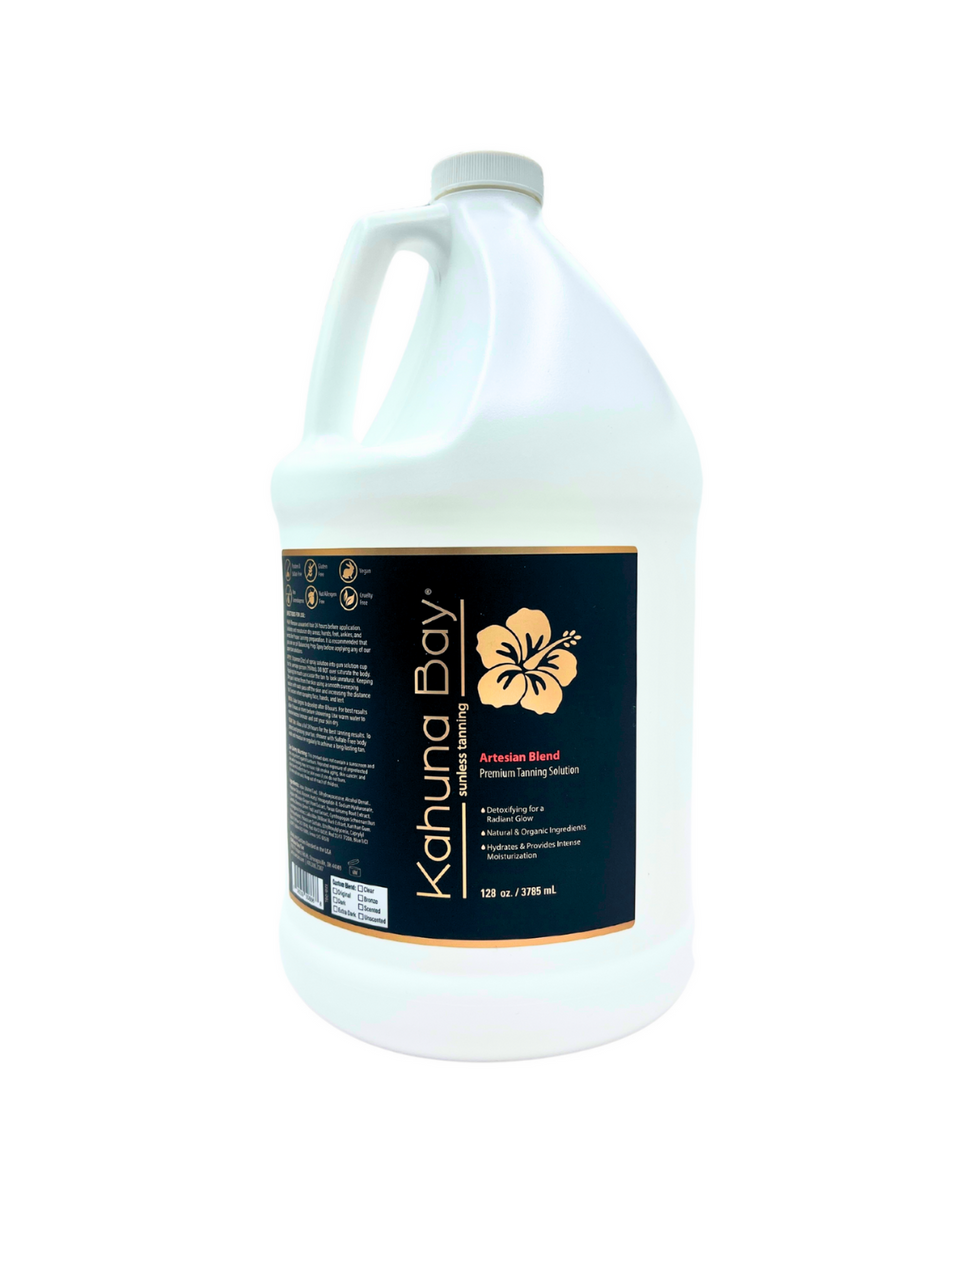 Kahuna Bay Tan Artesian Blend Original  Spray Tan Solution Gallon Bottle - Vegan and Cruelty-Free